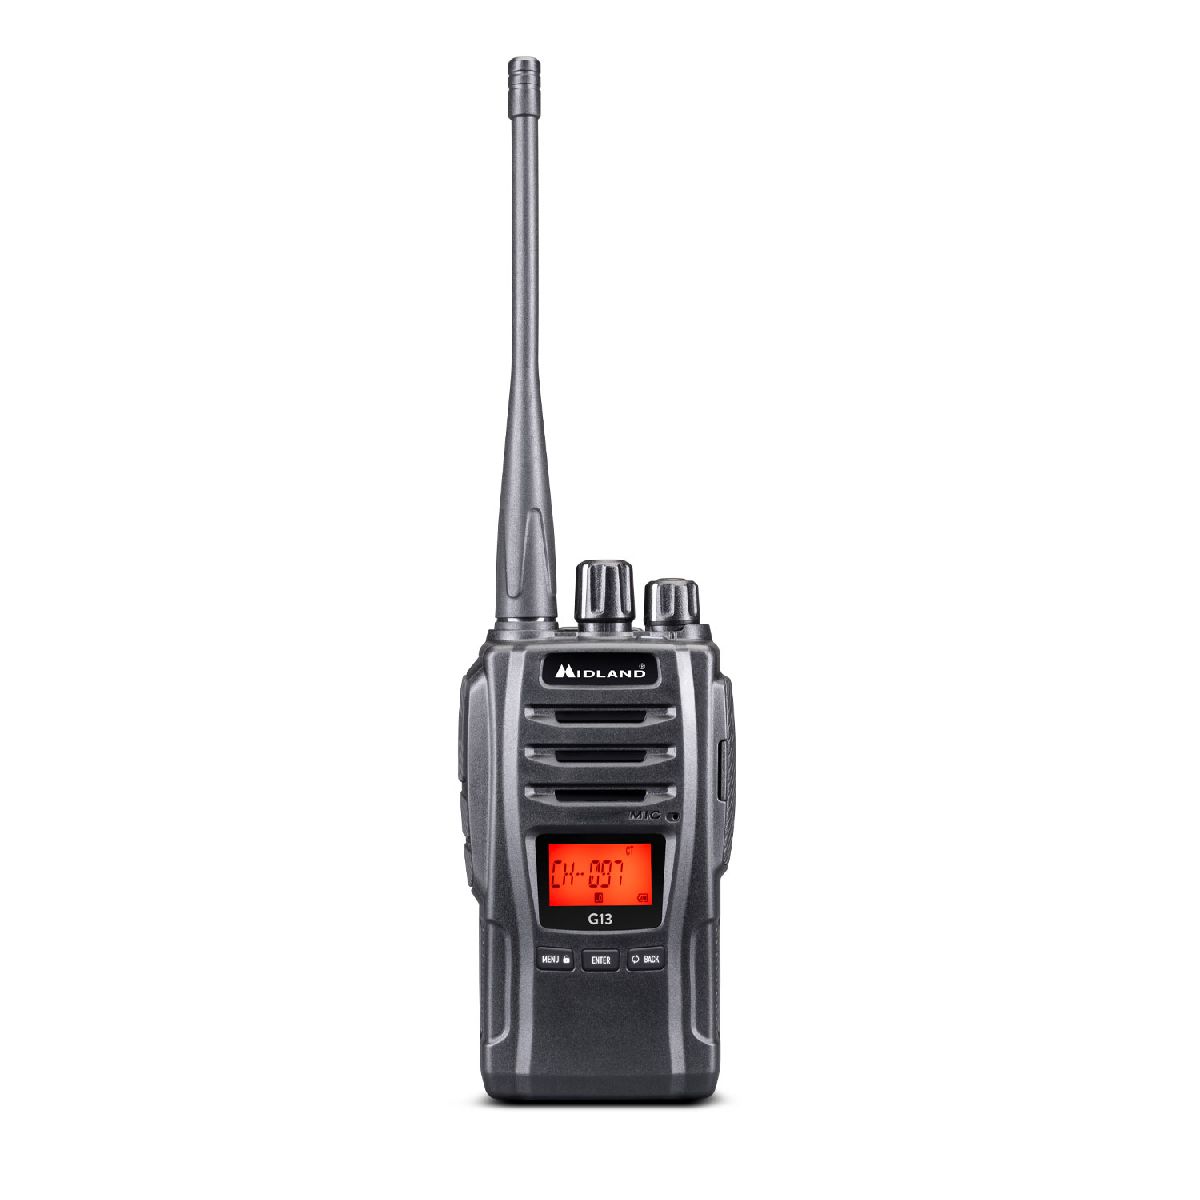 G13 PMR radio portable 